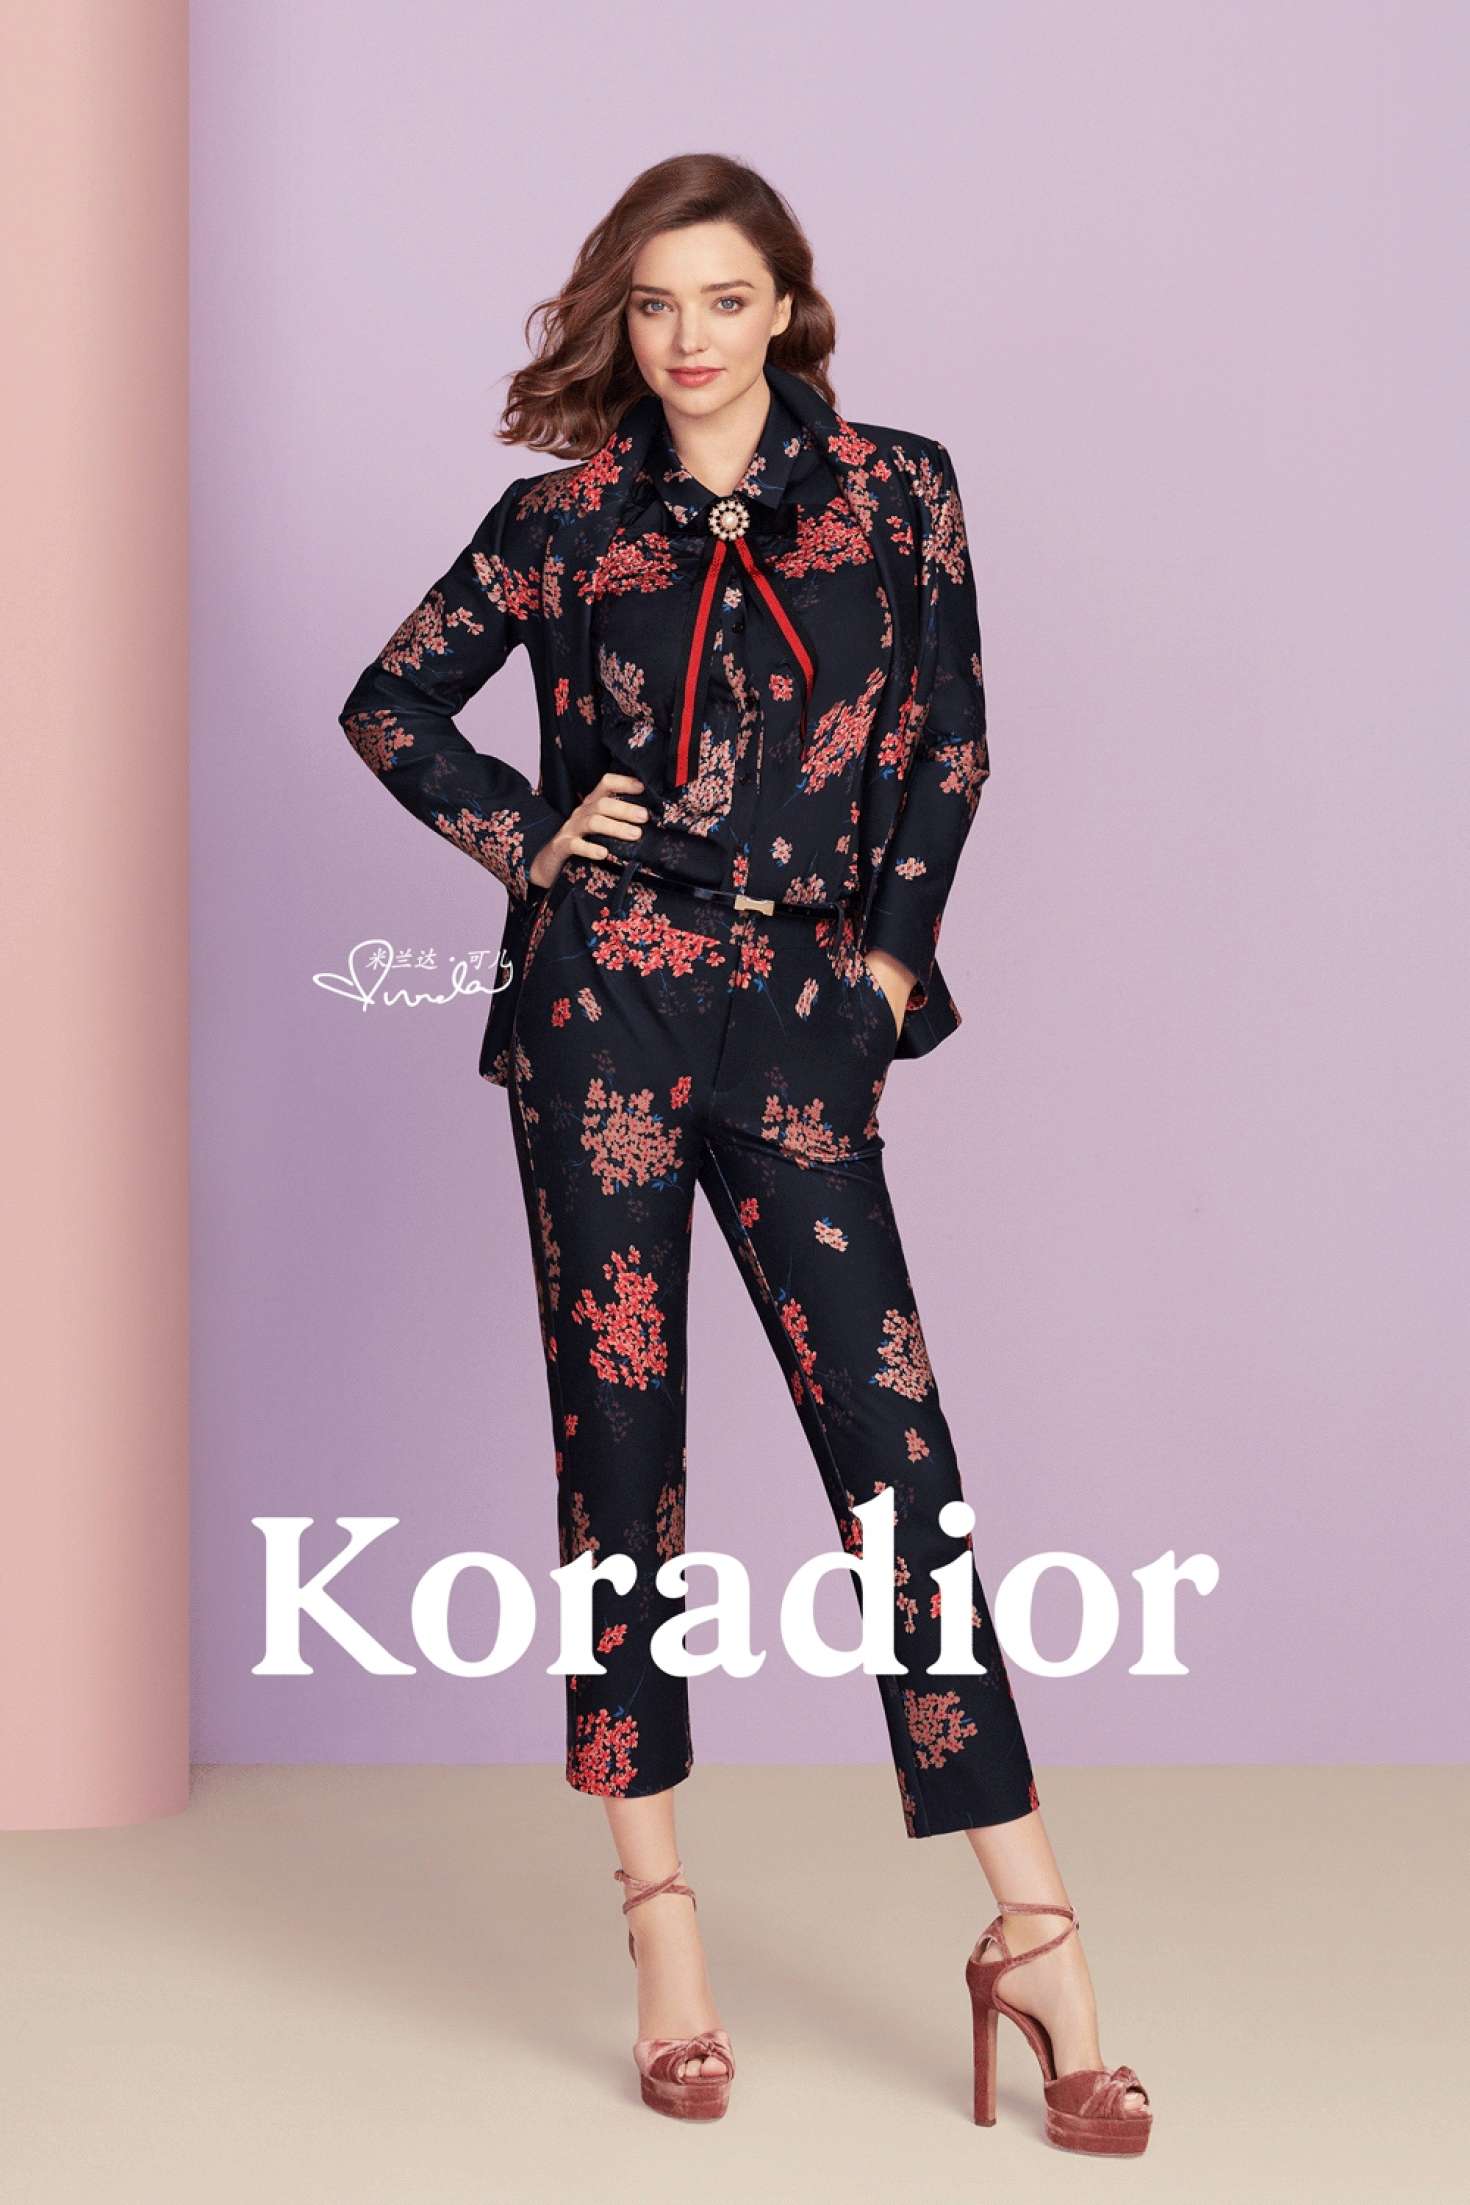 Miranda Kerr in Koradior Spring 2018 Campaign